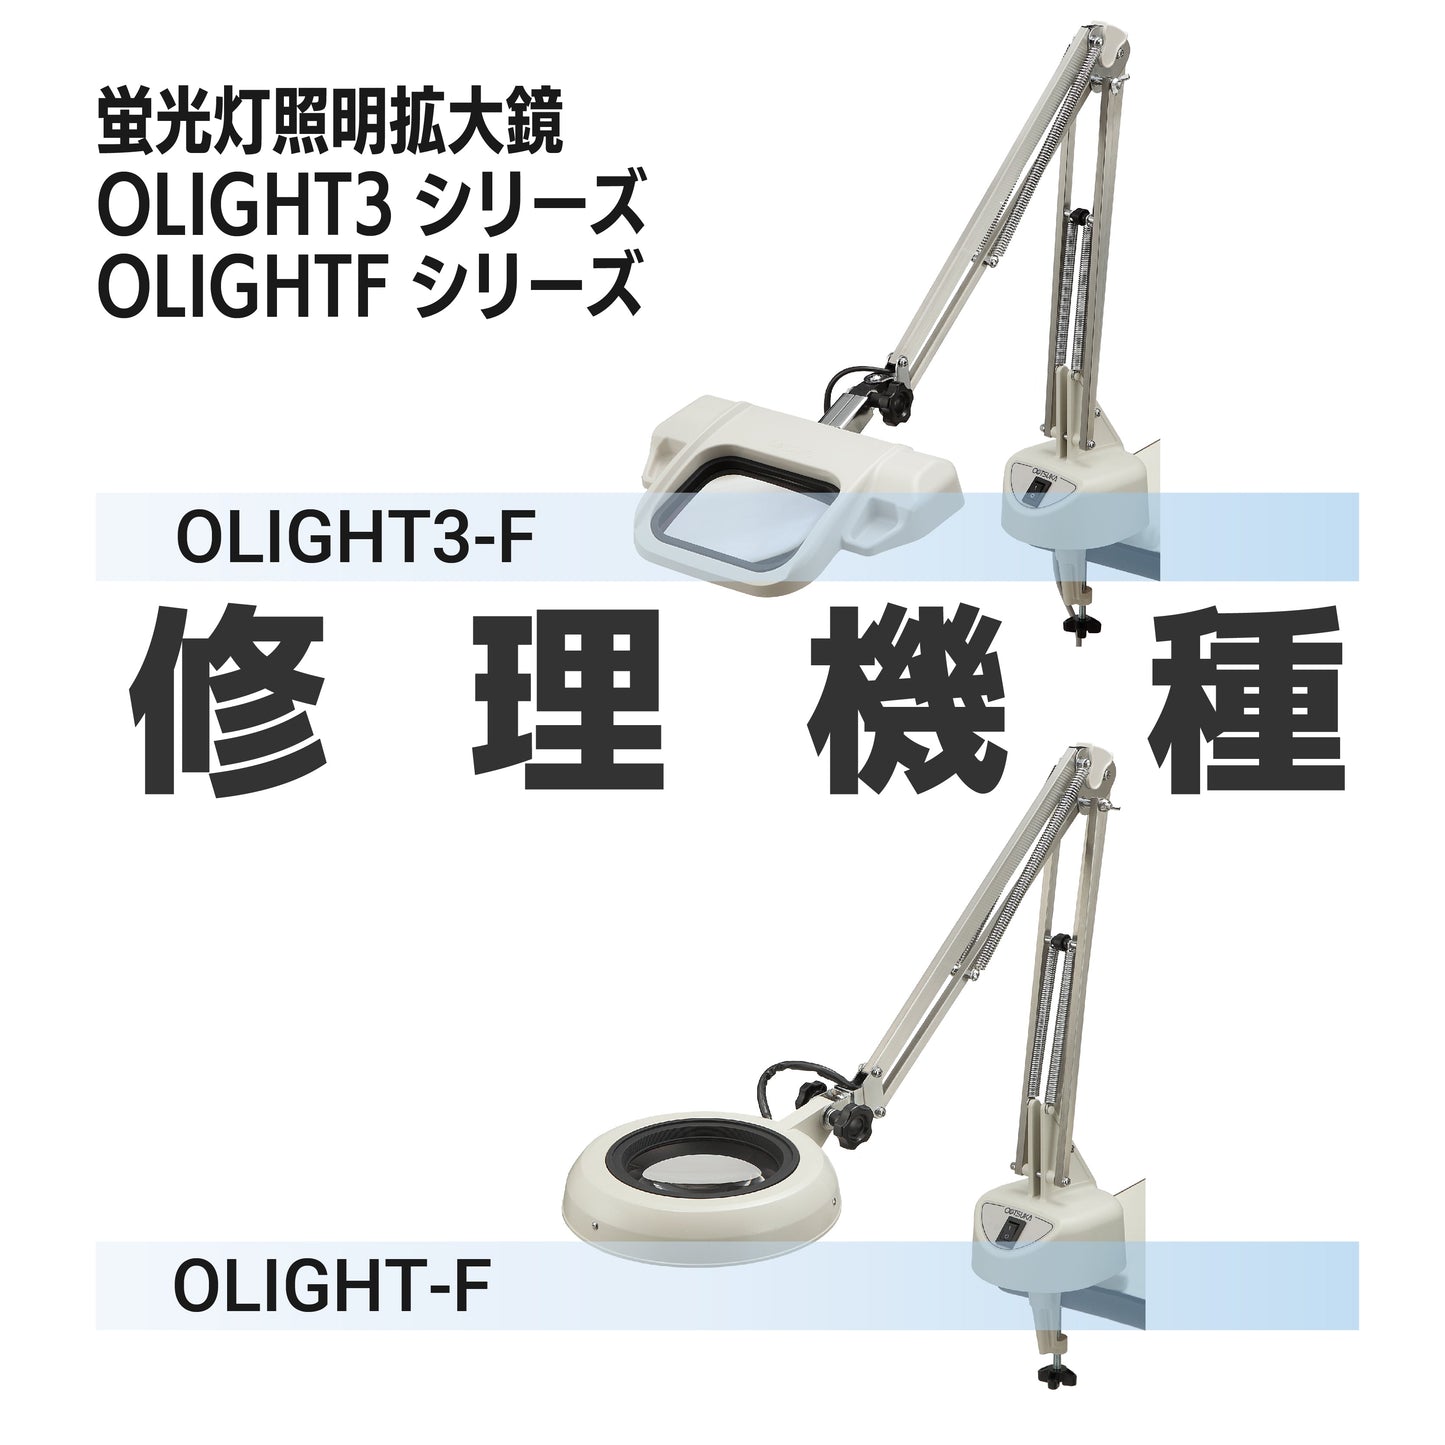 OLIGHT3シリーズ：OLIGHT3-F型 / OLIGHT-Fシリーズ：OLIGHT-F型